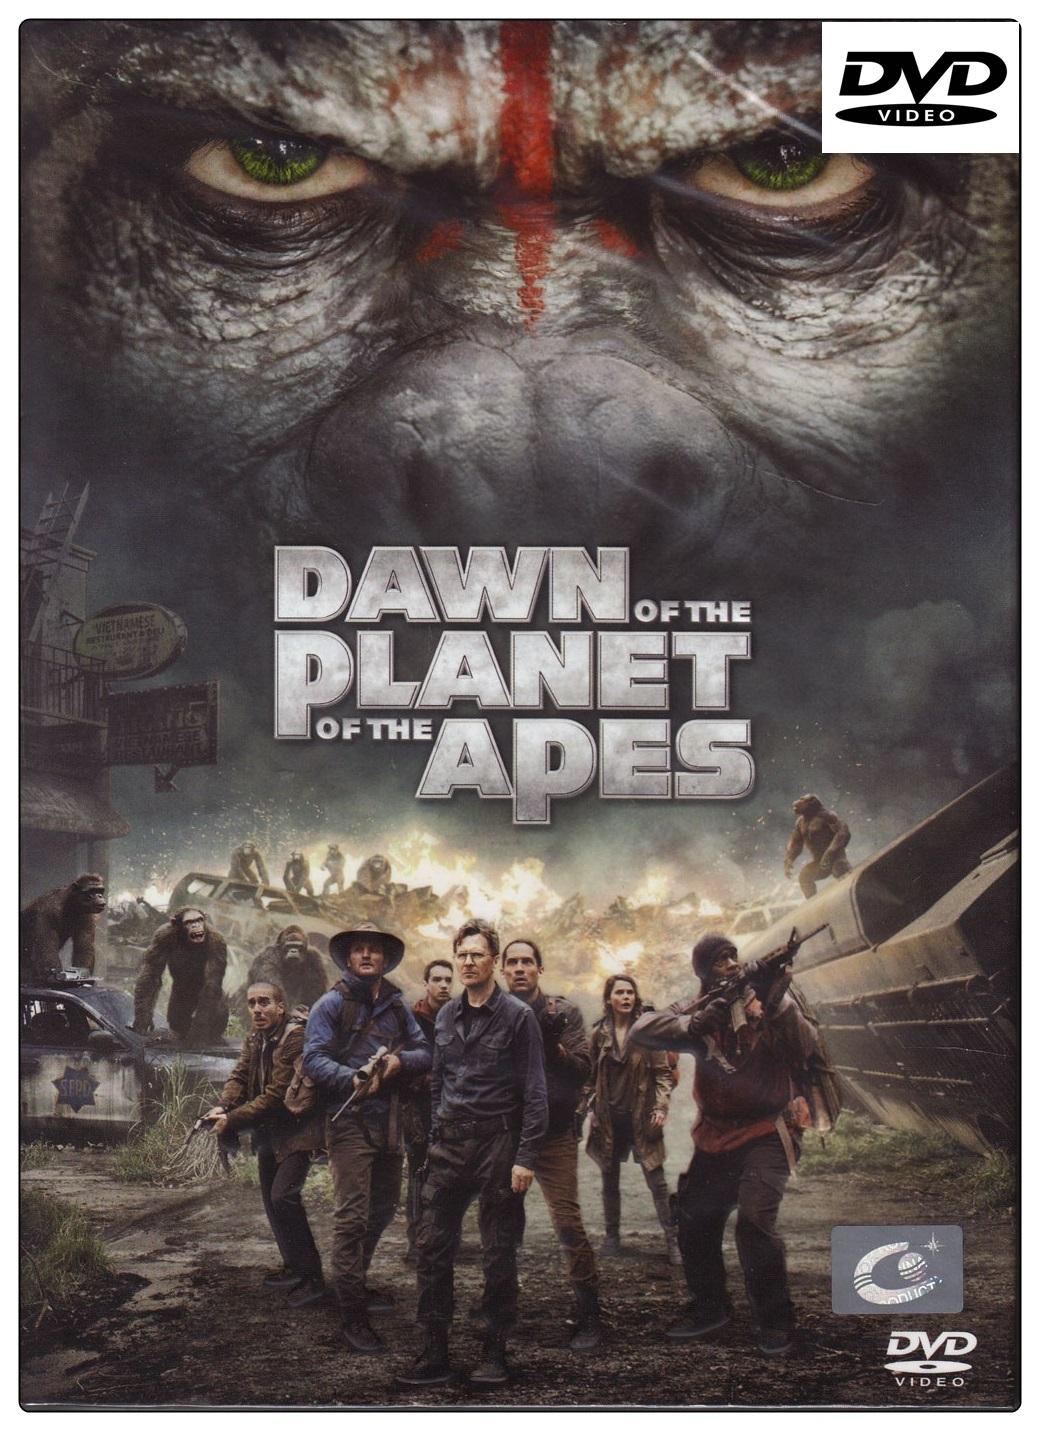 Dawn Of The Planet Of The Apes รุ่งอรุณแห่งอาณาจักรพิภพวานร (DVD ดีวีดี)